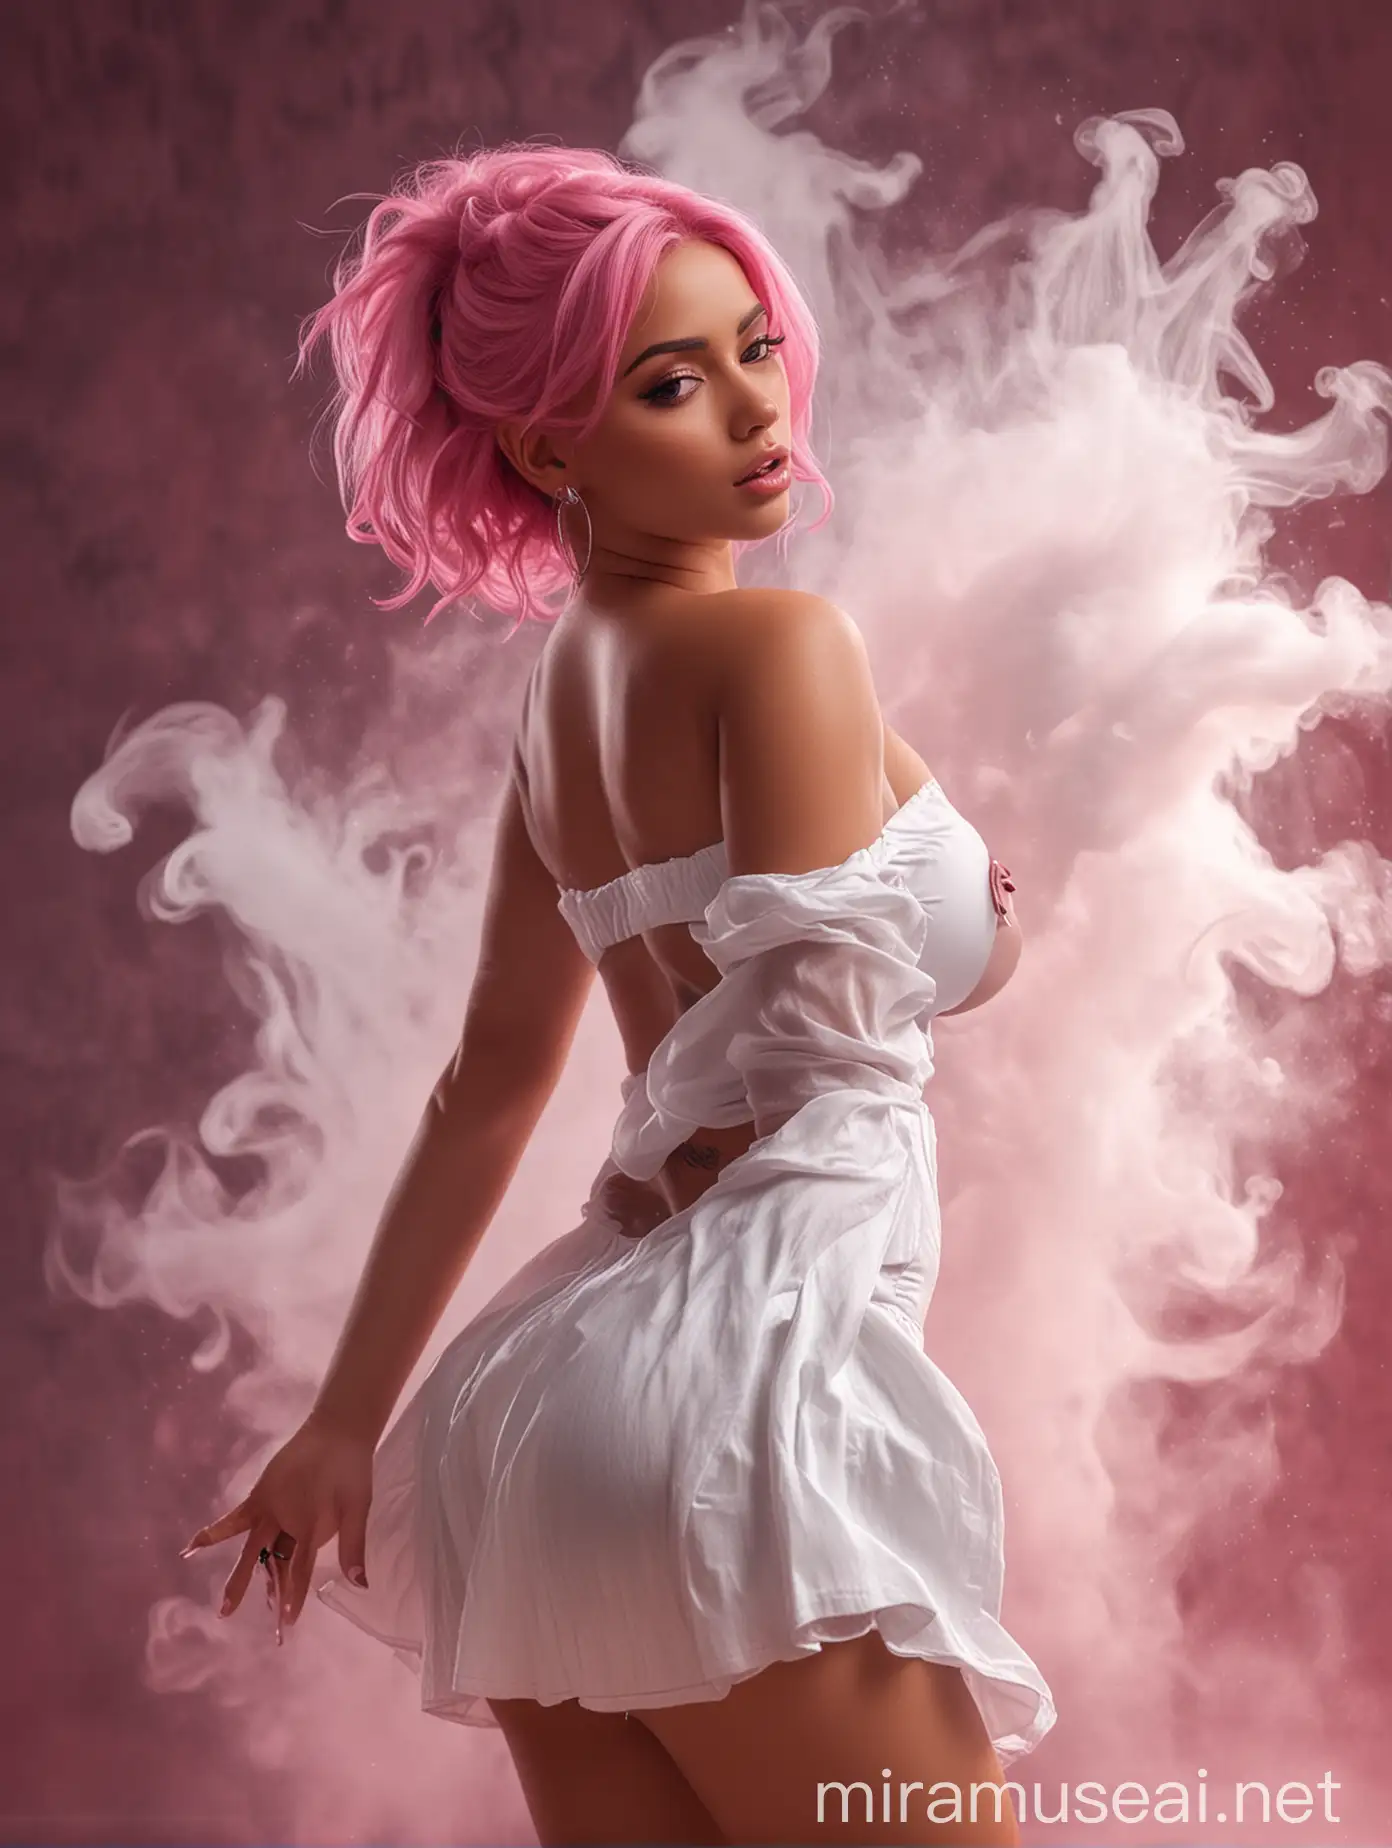 Sensual Latin Woman Dancing in Ethereal Pink and Teal Smoke